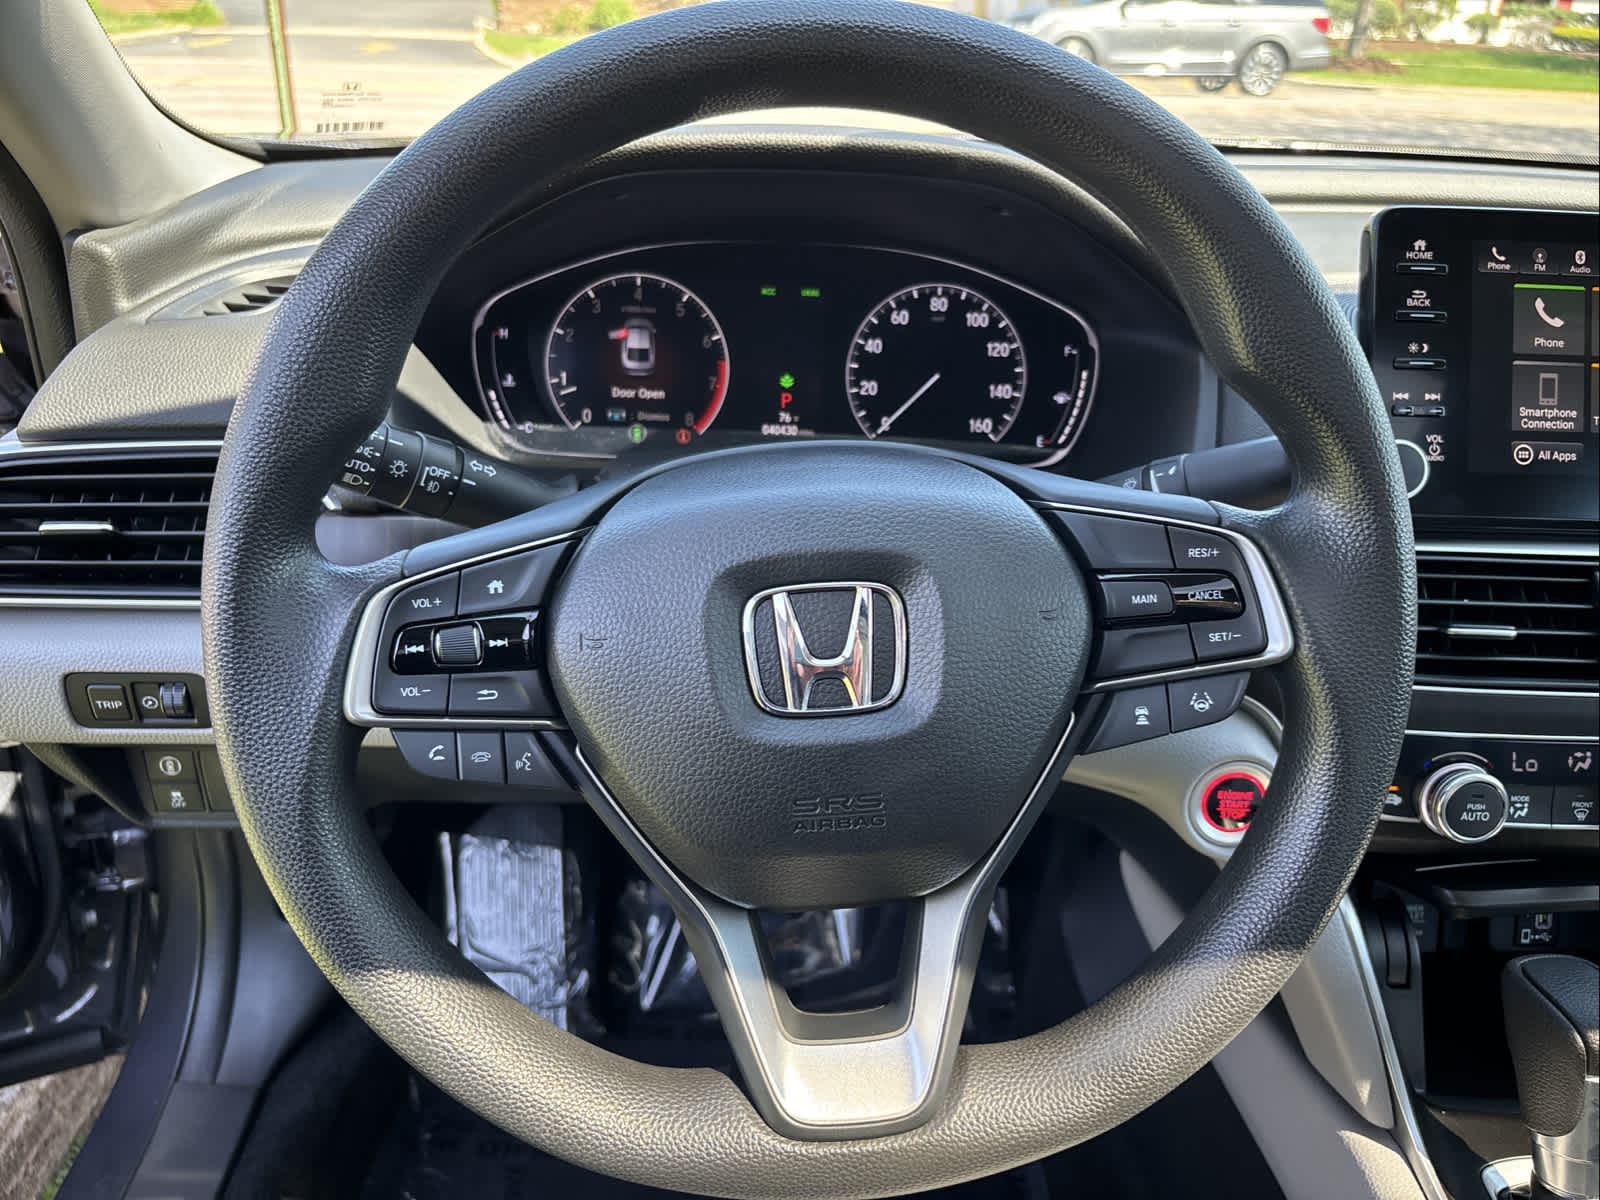 2018 Honda Accord EX 1.5T 11